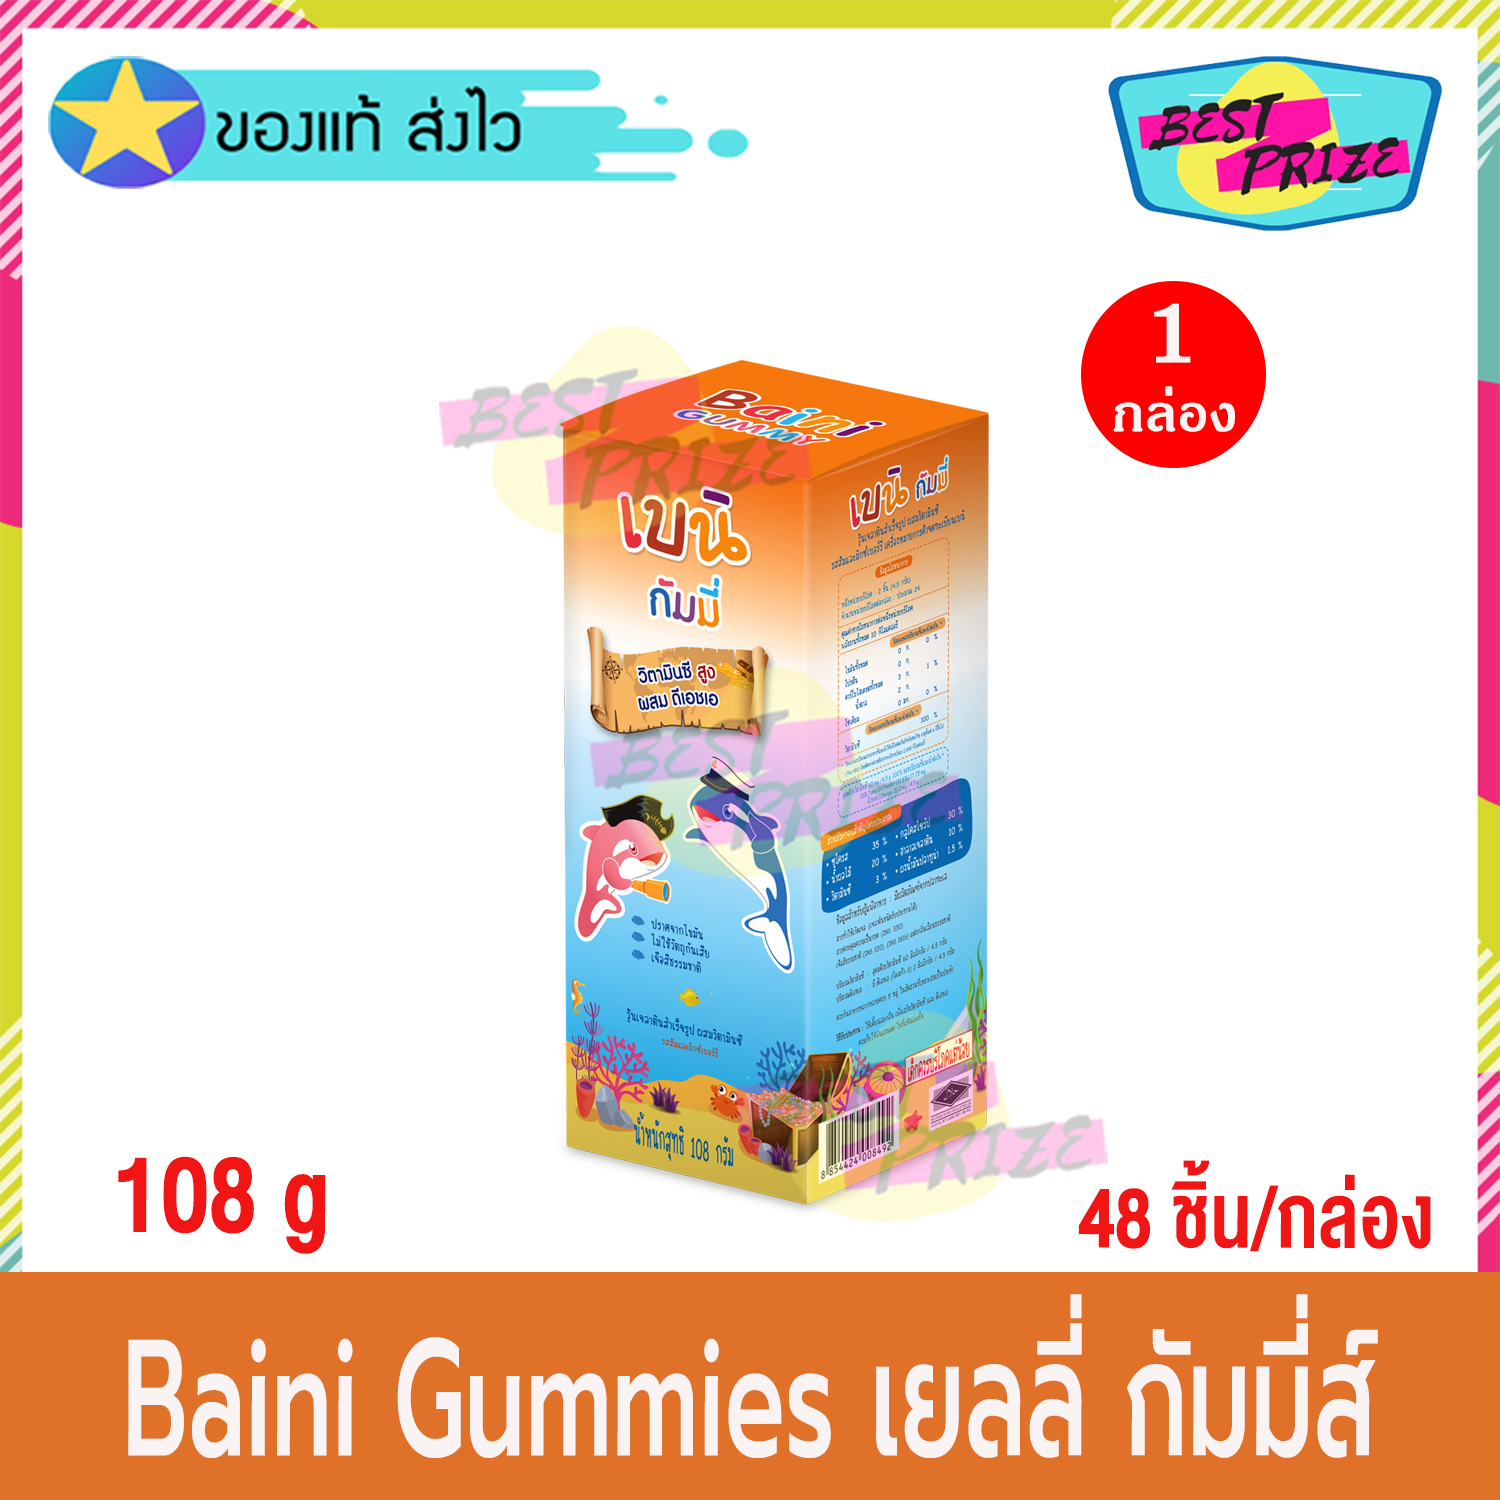 Bain Baini Gummies High Vitamin C DHA 108 g (จำนวน 1 กล่อง) เบน เบนิ กัมมี่ส์ เยลลี่ วิตามินซี ผสม ดีเอชเอ อาหารเสริม อาหารเสริมเด็ก รสส้ม รสมิกซ์เบอรี่